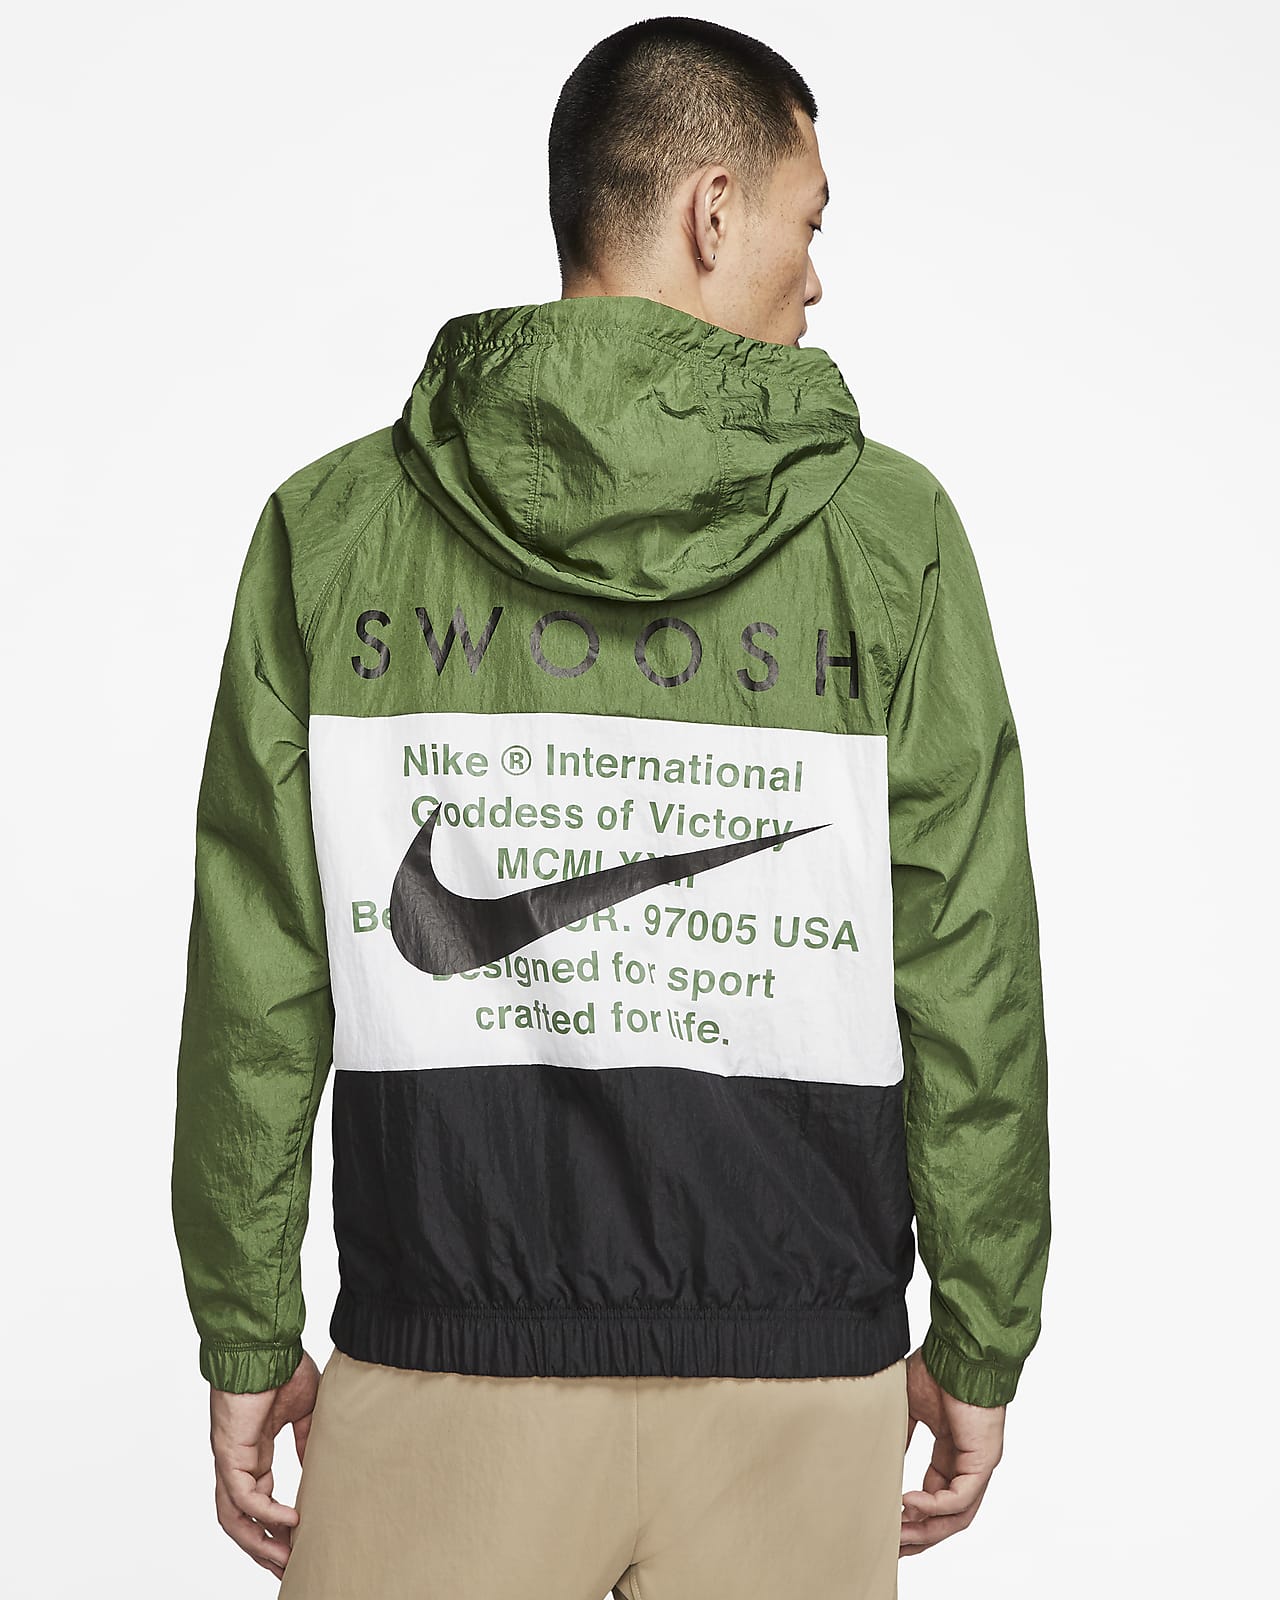 nike sportswear swoosh green